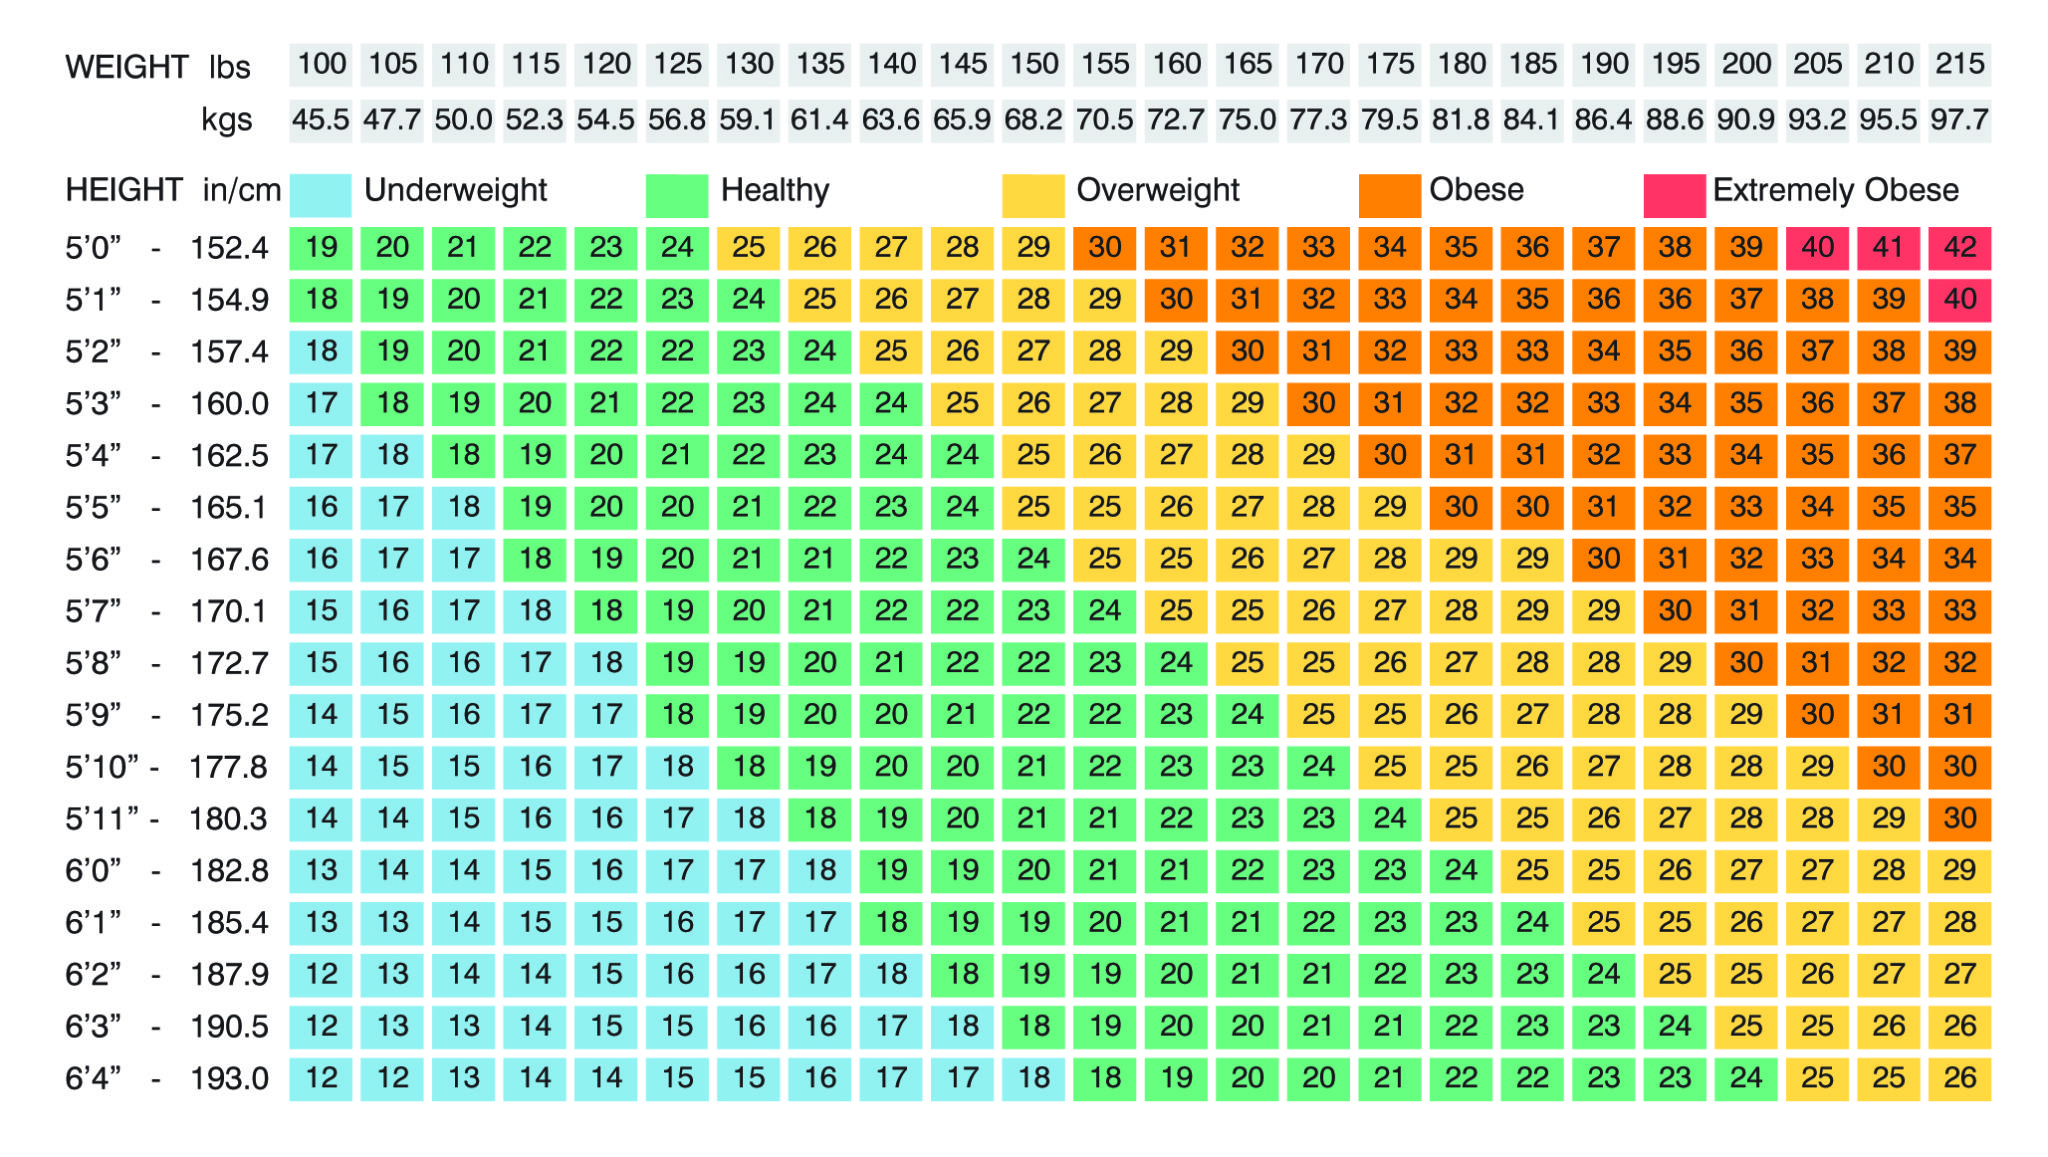 Height 180. ИМТ таблица. Таблица идеального веса. Индекс массы тела таблица. Таблица индекса массы тела по росту и весу.